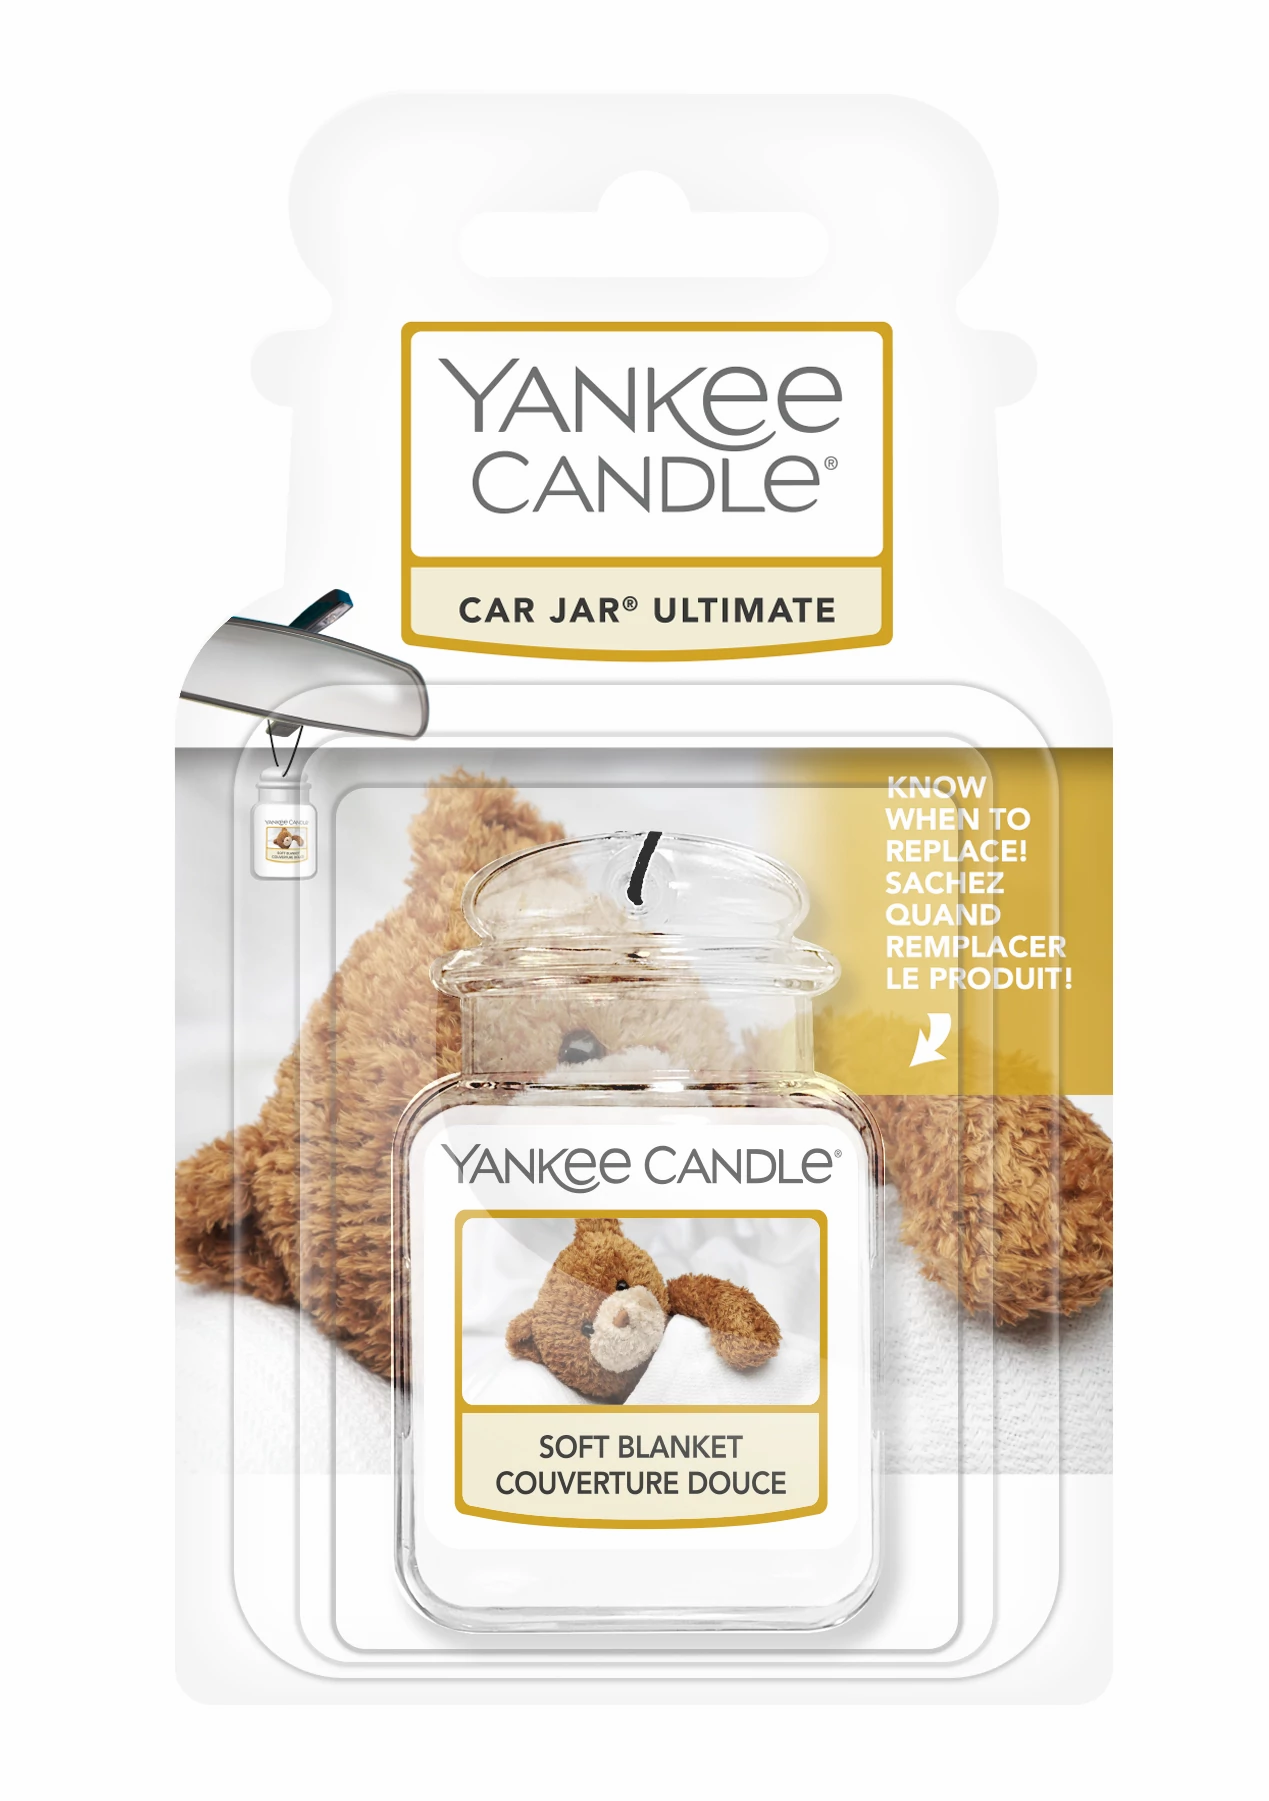 Yankee Candle - Car Jar Ultimate Soft Blanket